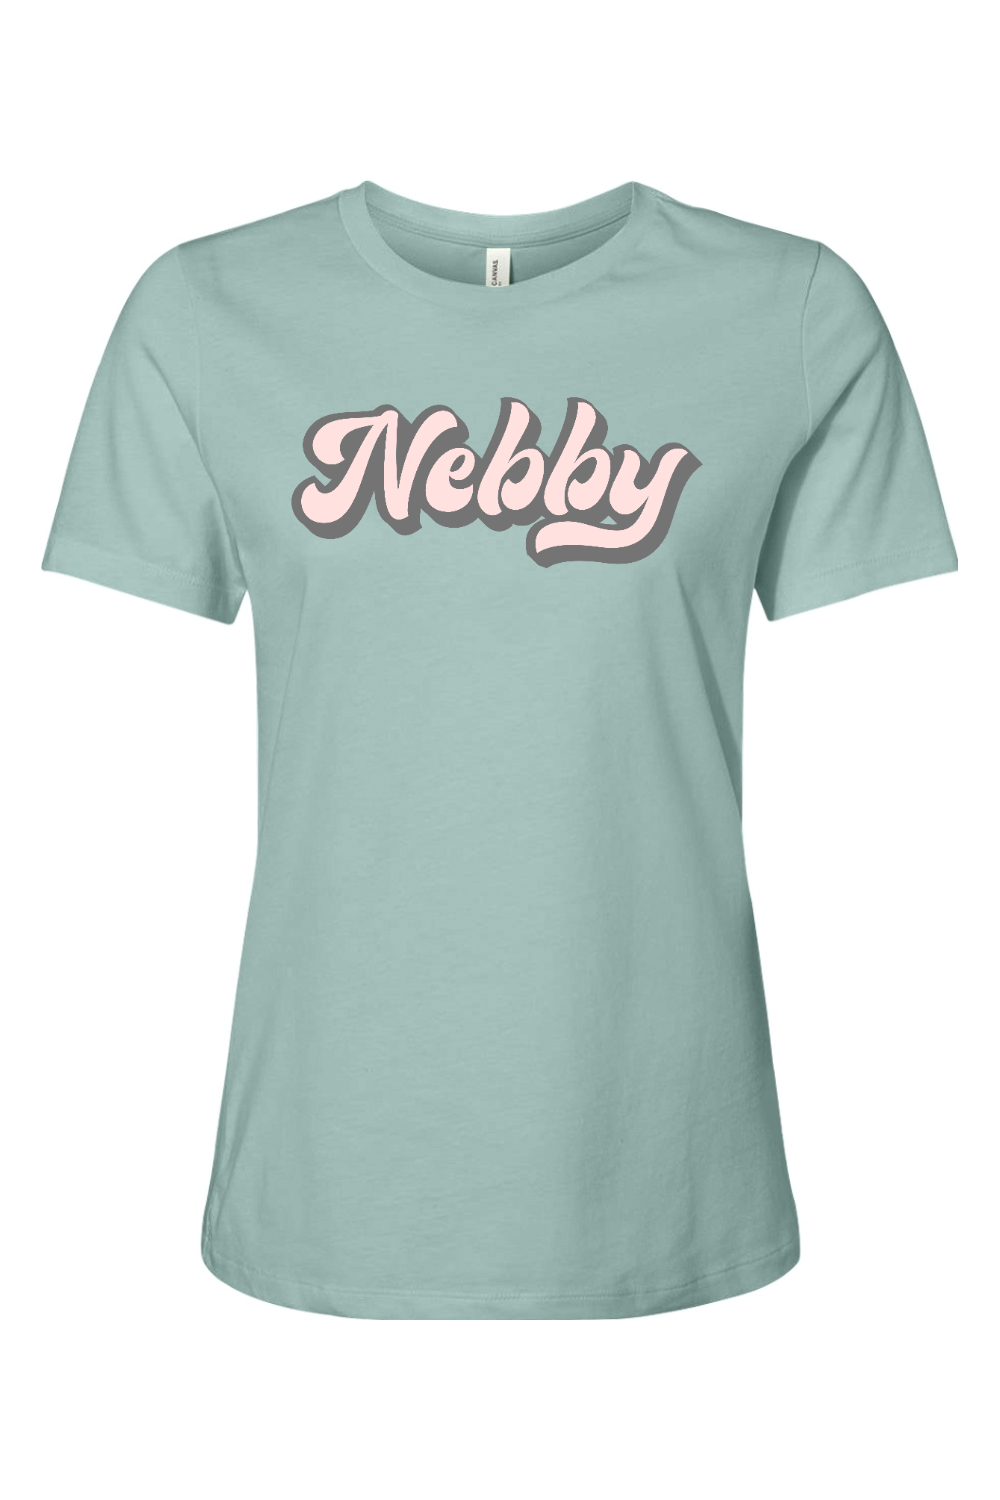 Nebby - Bella + Canvas Women’s Relaxed Jersey Short Sleeve Tee - Yinzylvania